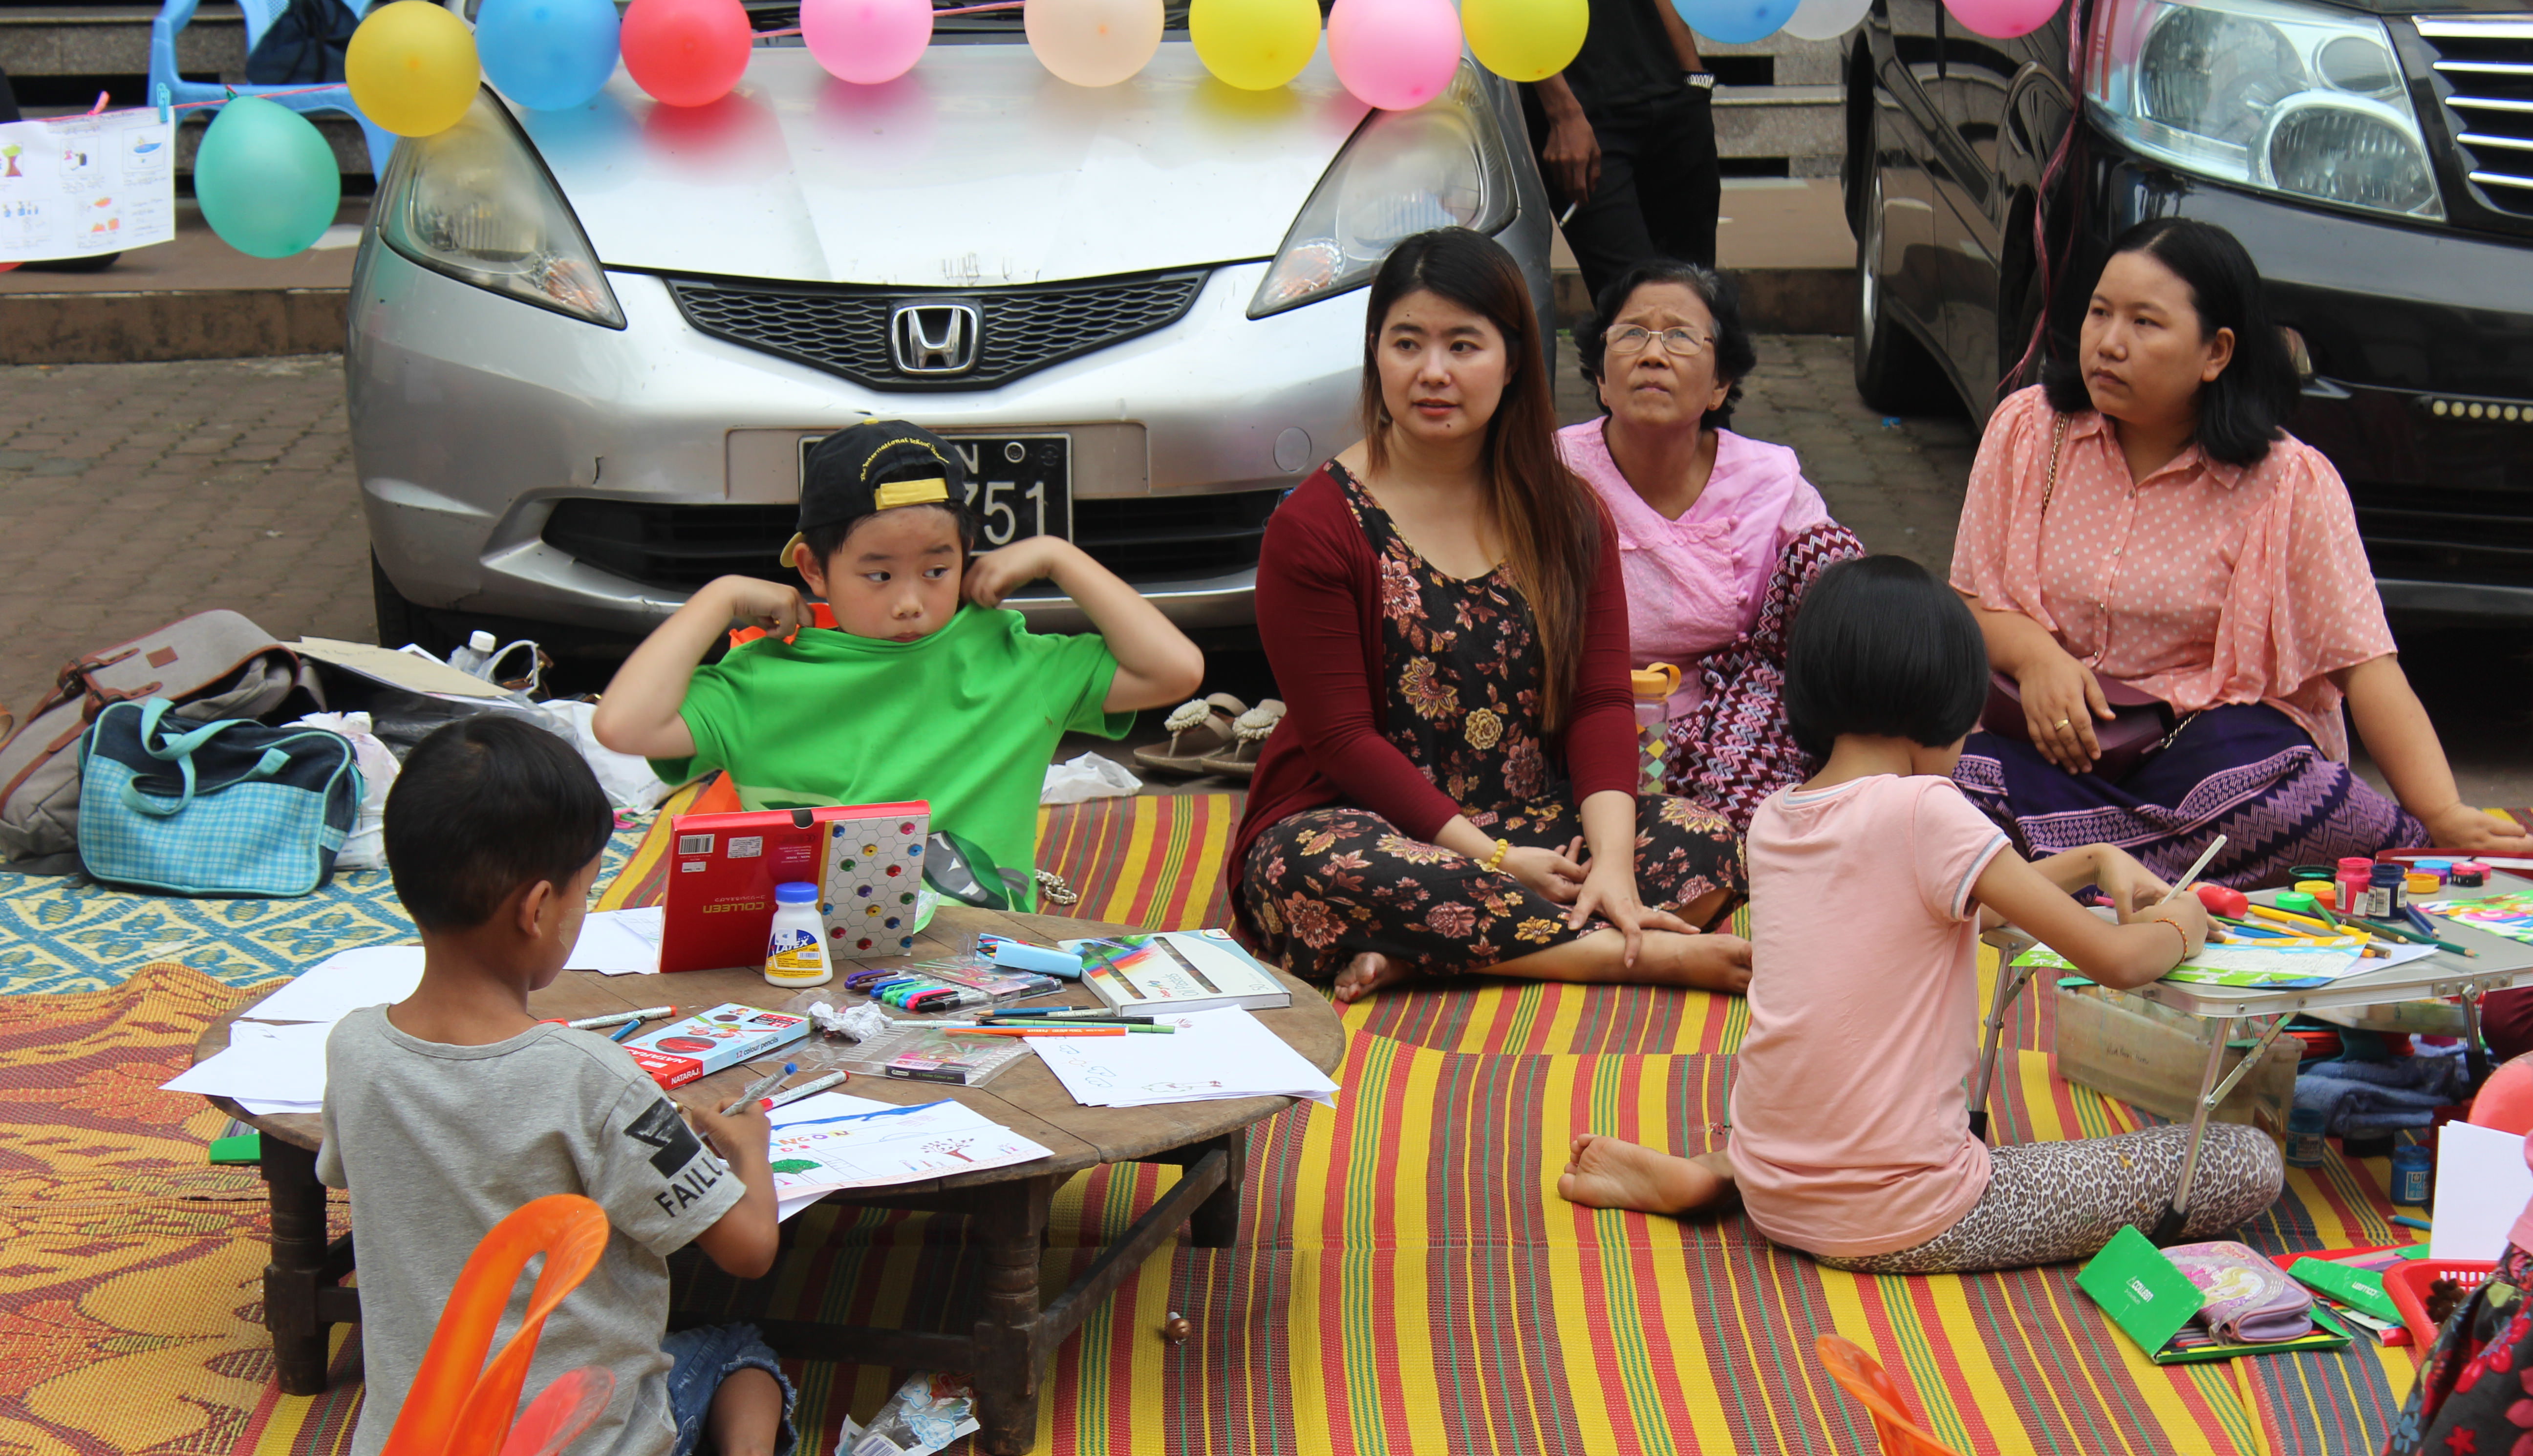 Yangon residents attend a street festival on Dec. 8, 2017. Photo: Jacob Goldberg